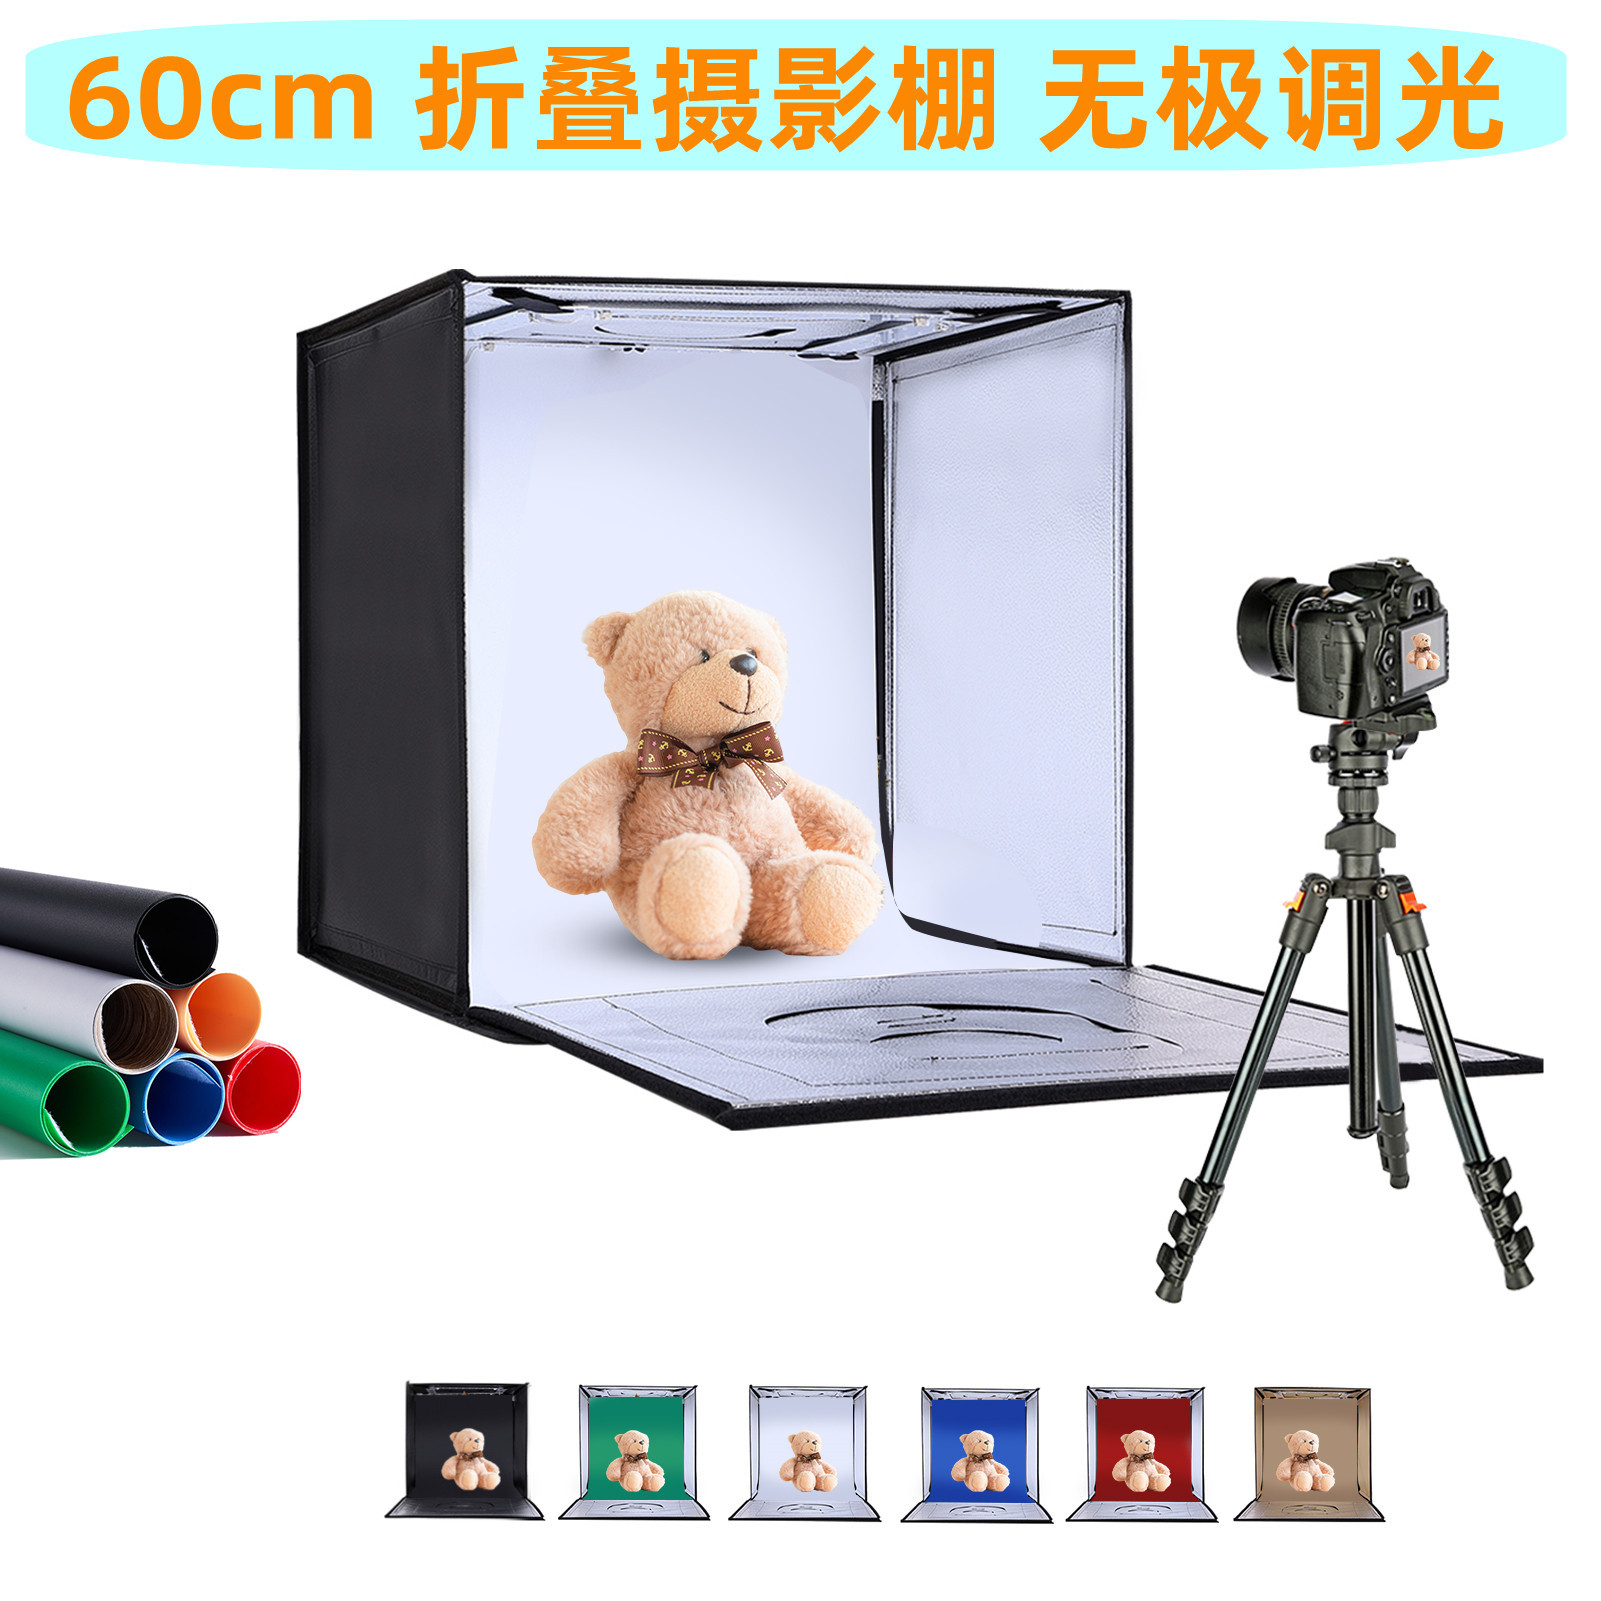 60cm portable Folding studio LED Adjustable light shed Camera box Photographic Equipment Softbox